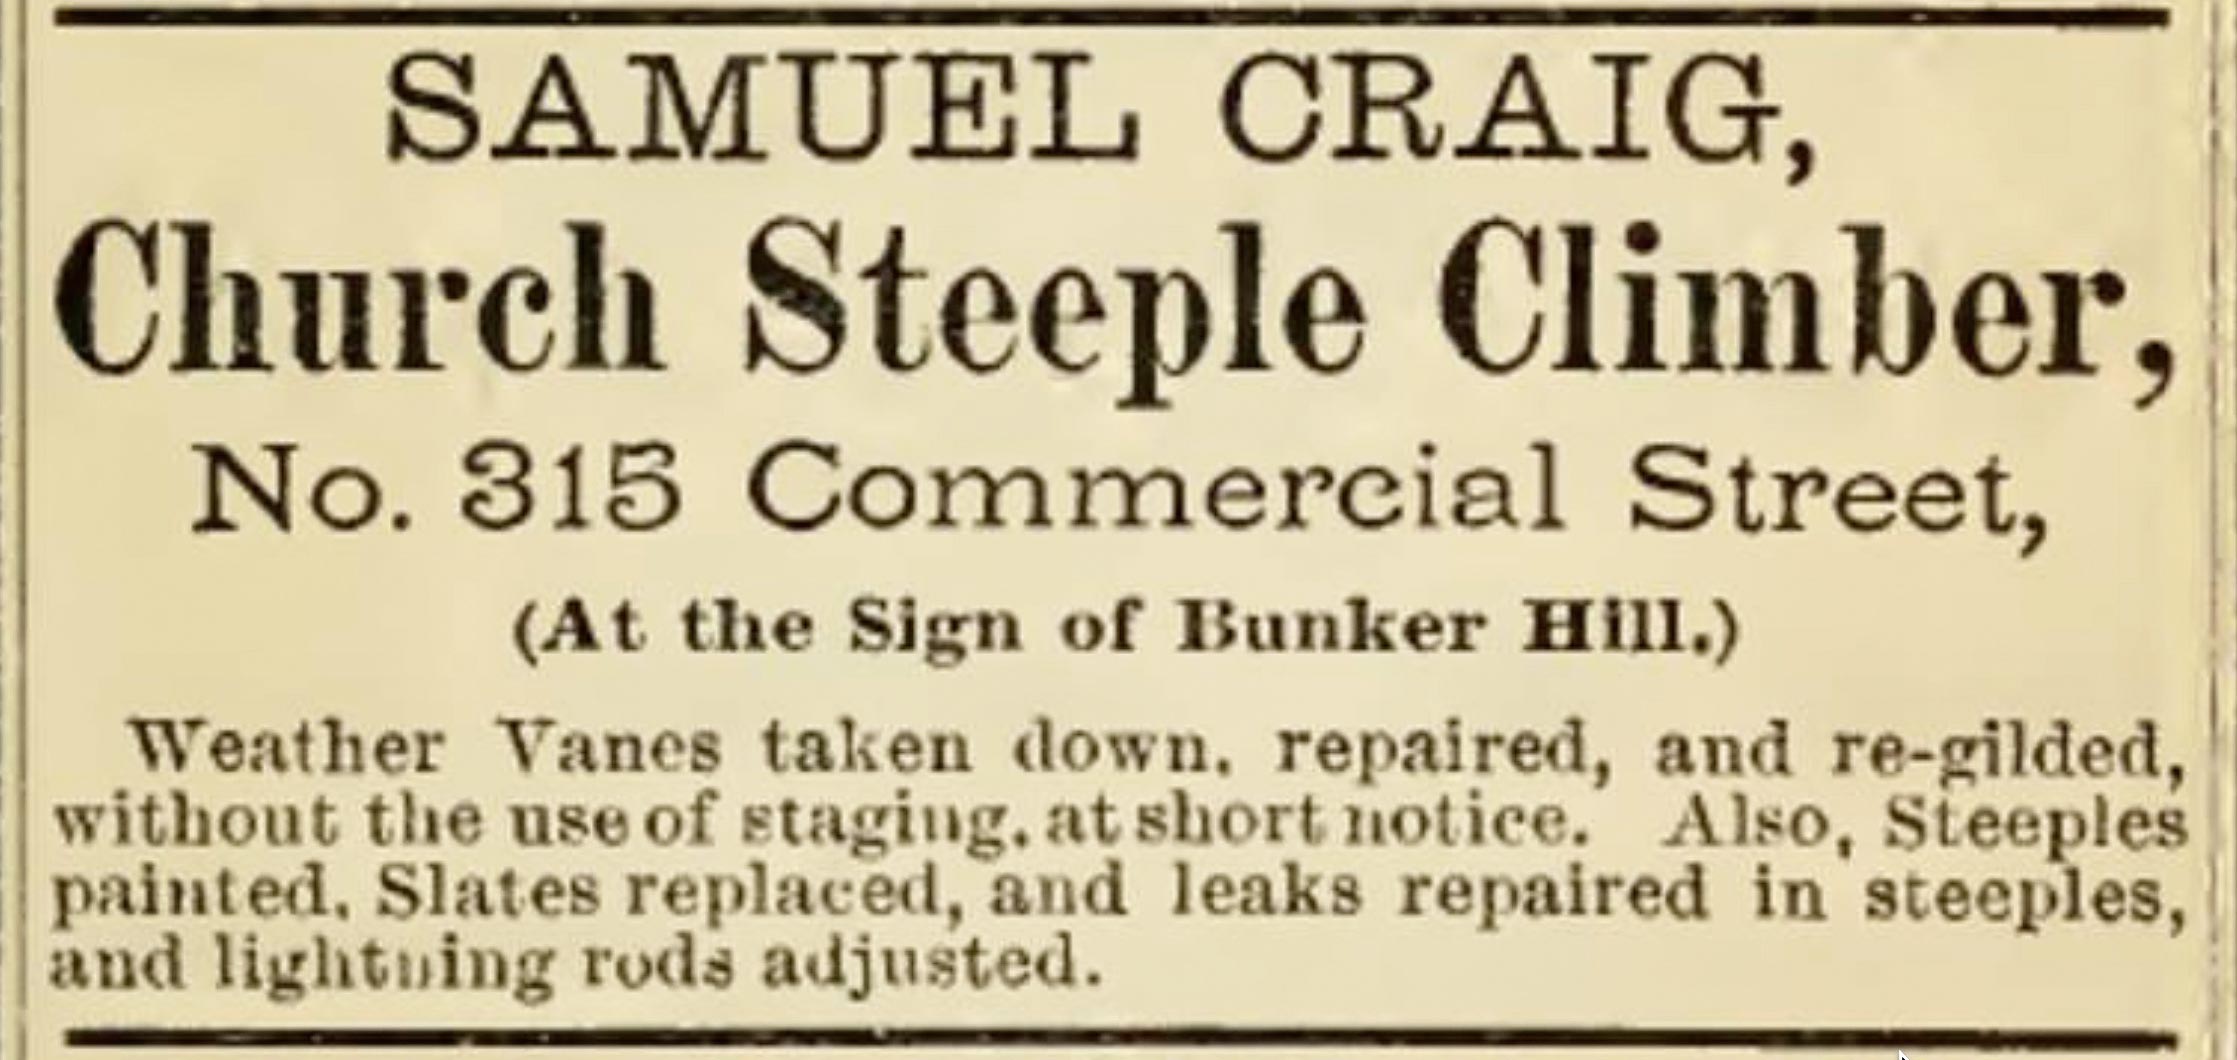 Samuel Craig, Church Steeple Climber advertisement, Boston, 1879.  